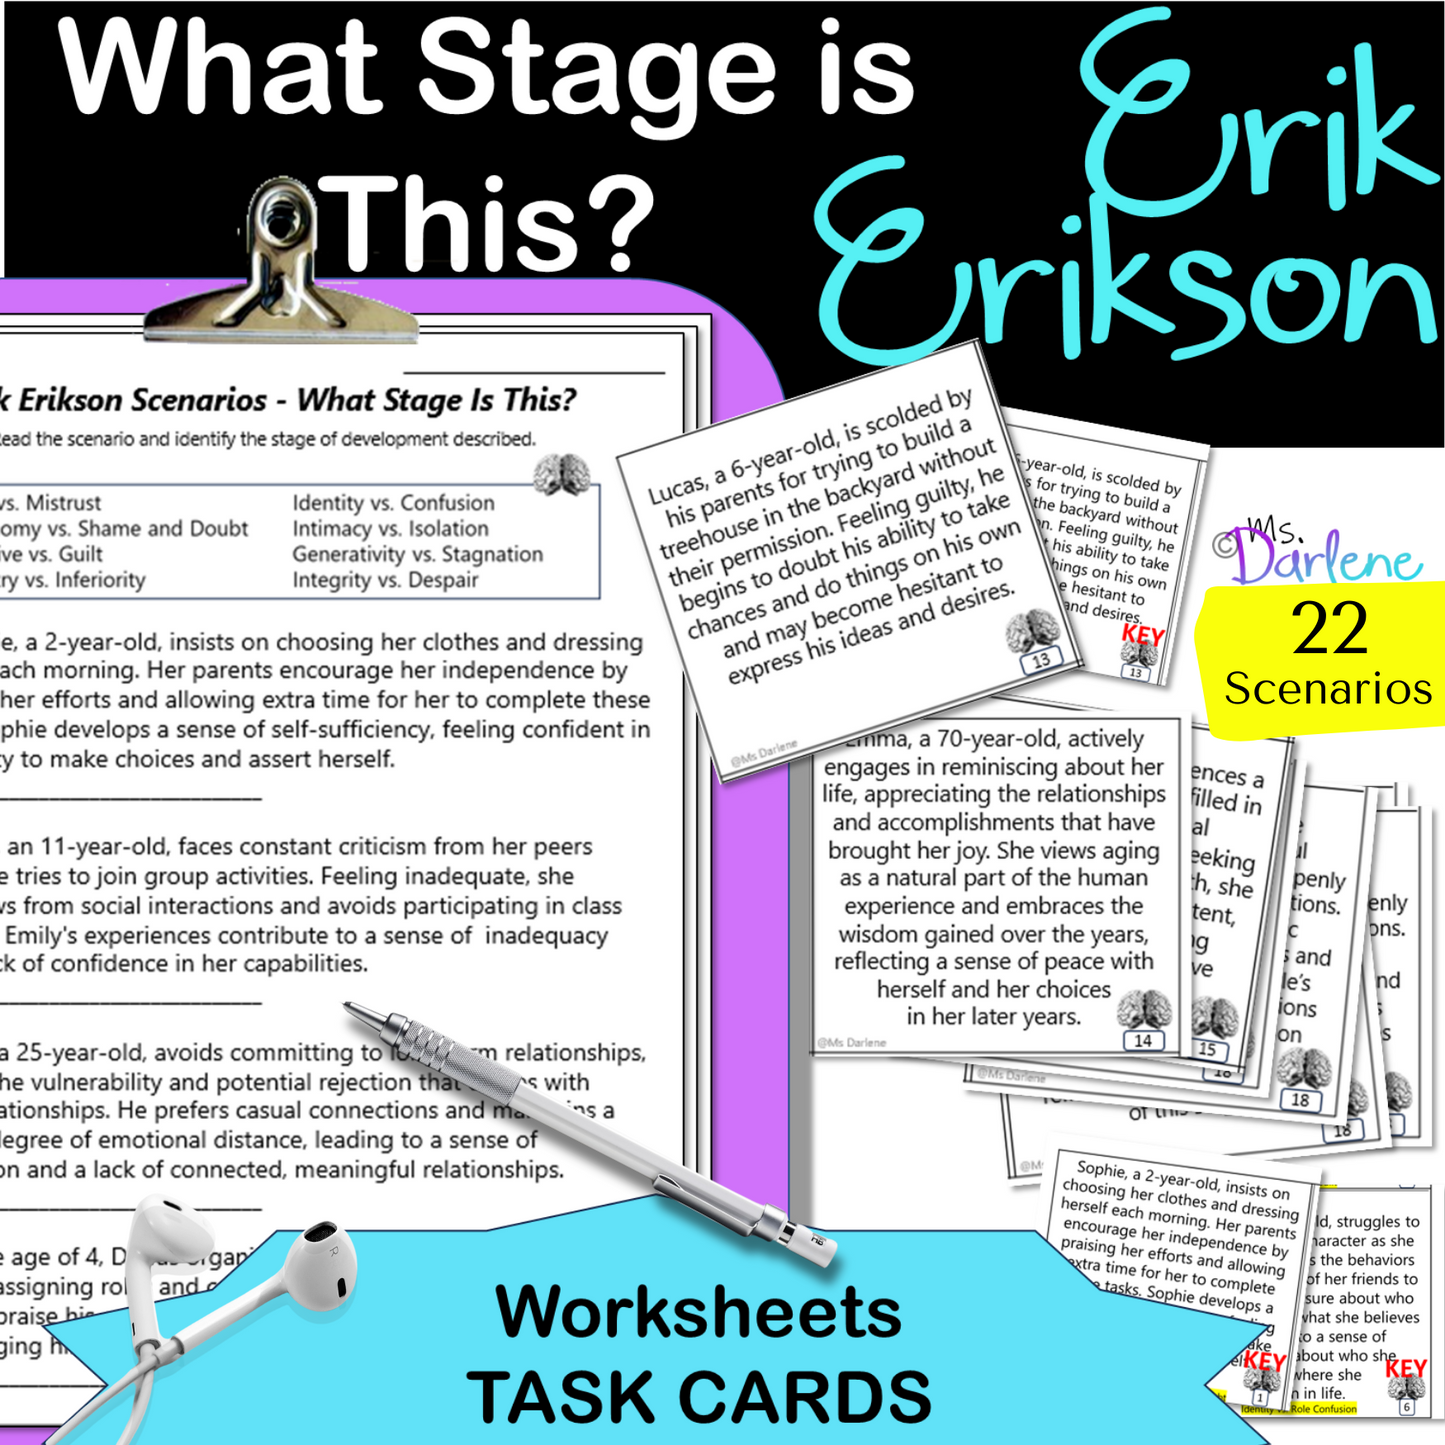 Erik Erikson Scenarios | What Stage is This? | Challenge | Worksheet | Task Card